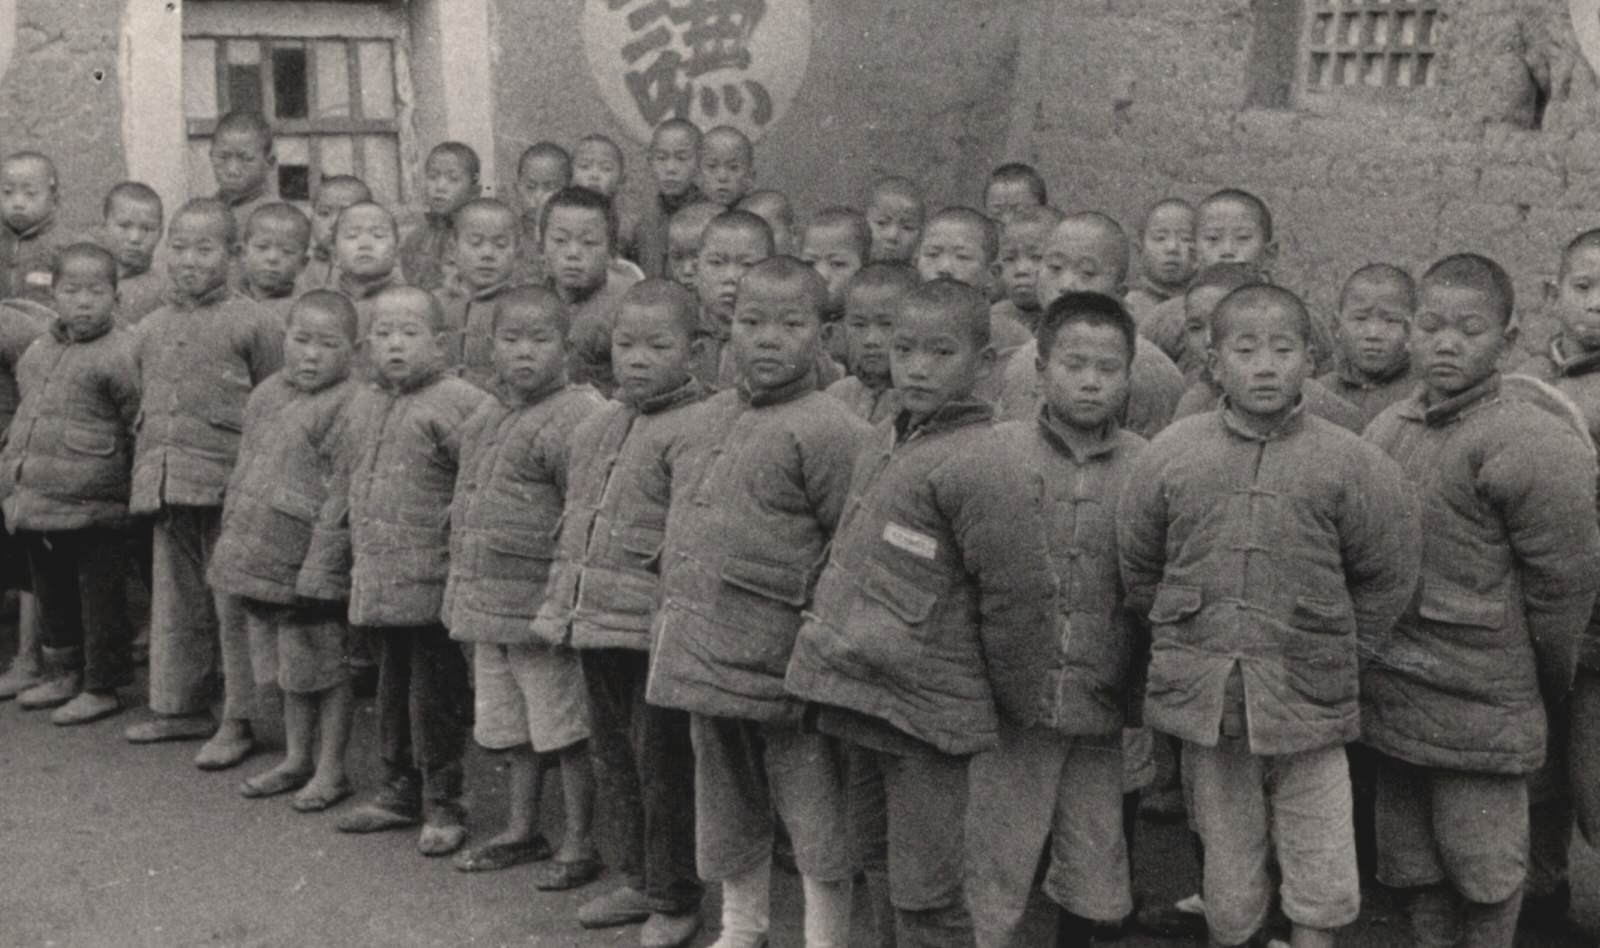 Under-nourished war-orphans in the Government orphanage at Kioshan (Qiaoshan) Honan (He'nan) Province. 1937-1940